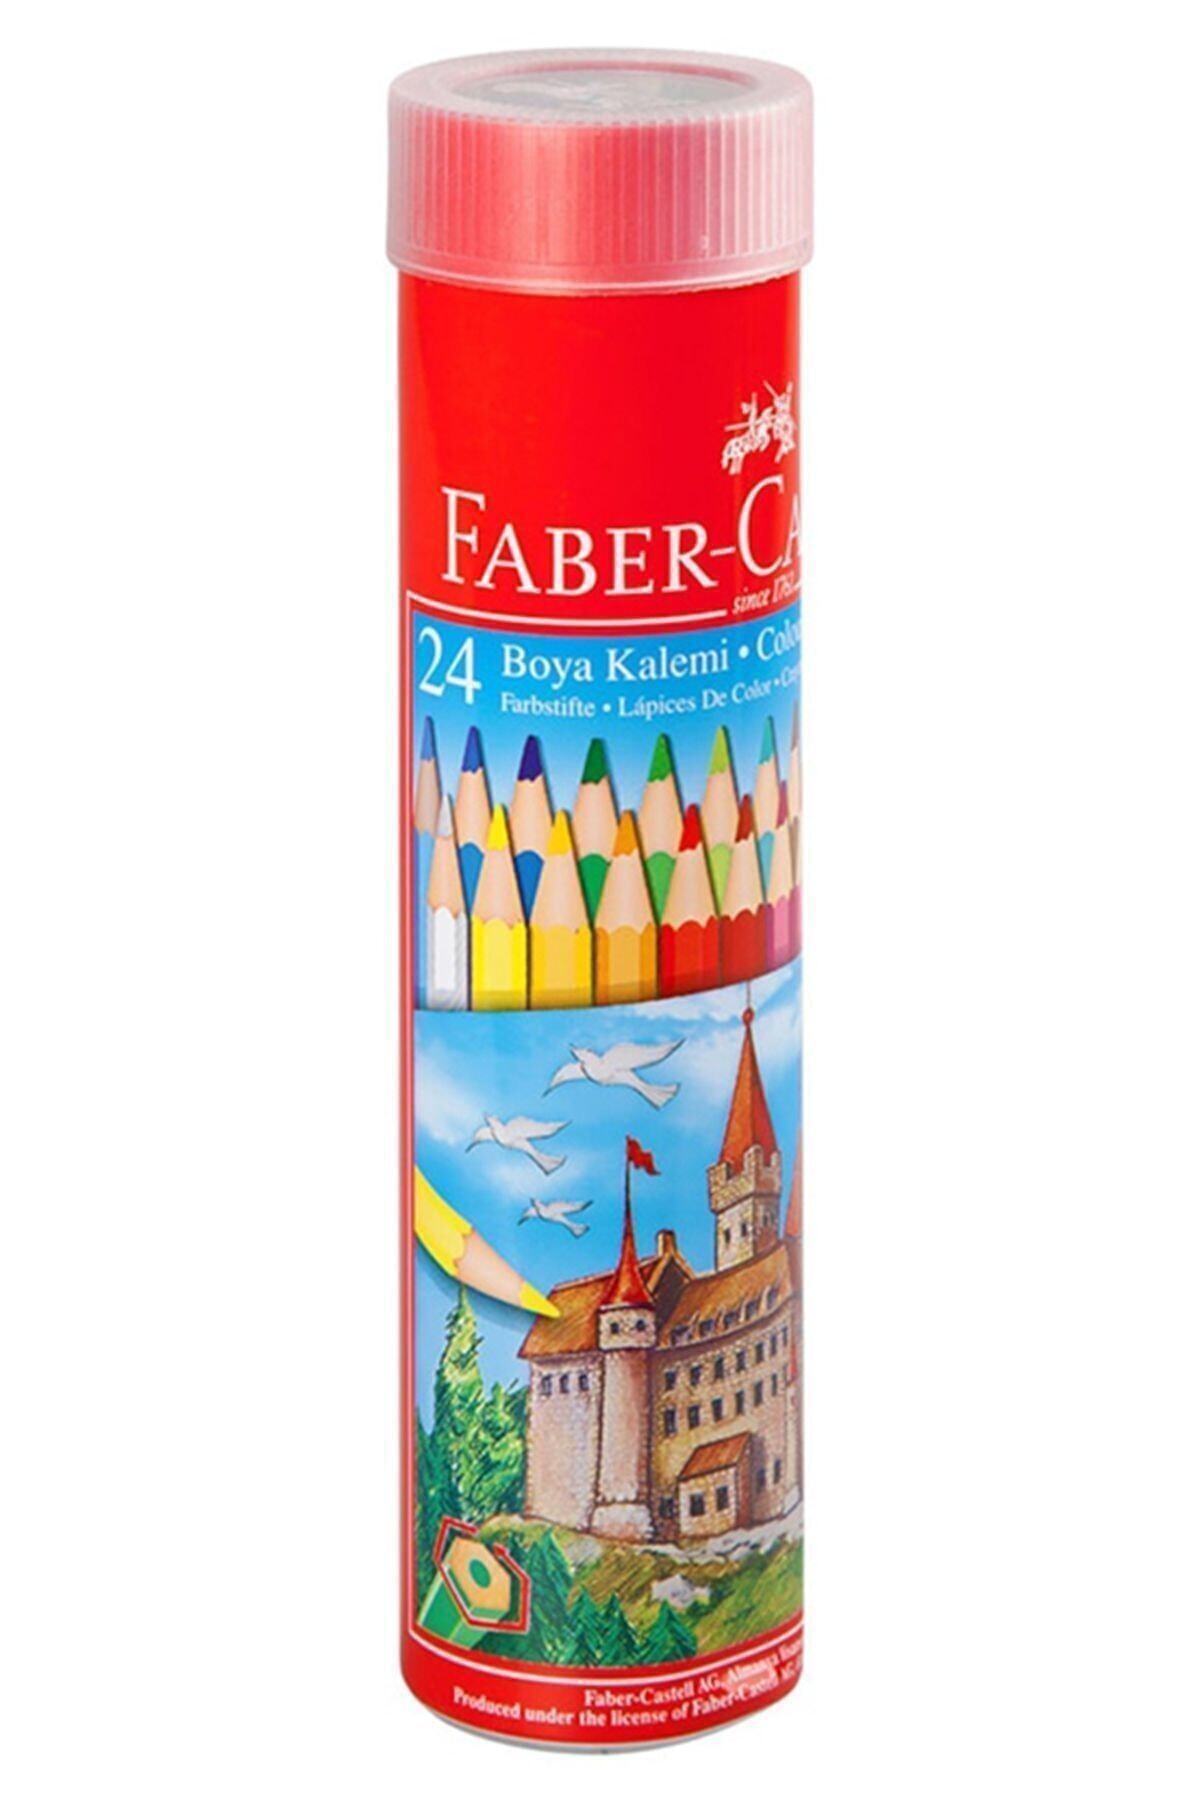 Faber-Castell 24 Renk Metal Tüp Kuru Boya 5173116524